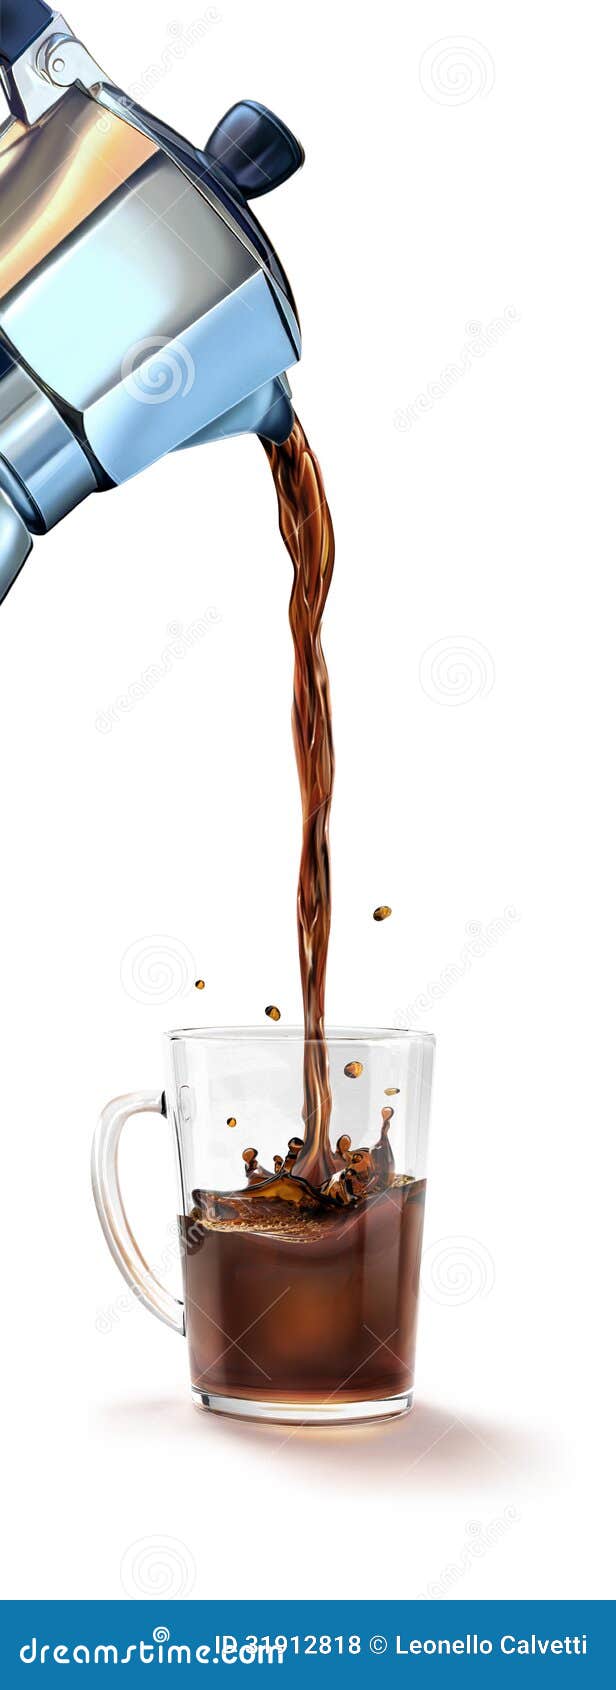 moka coffee machine pouring coffee into a glass mug splashing.